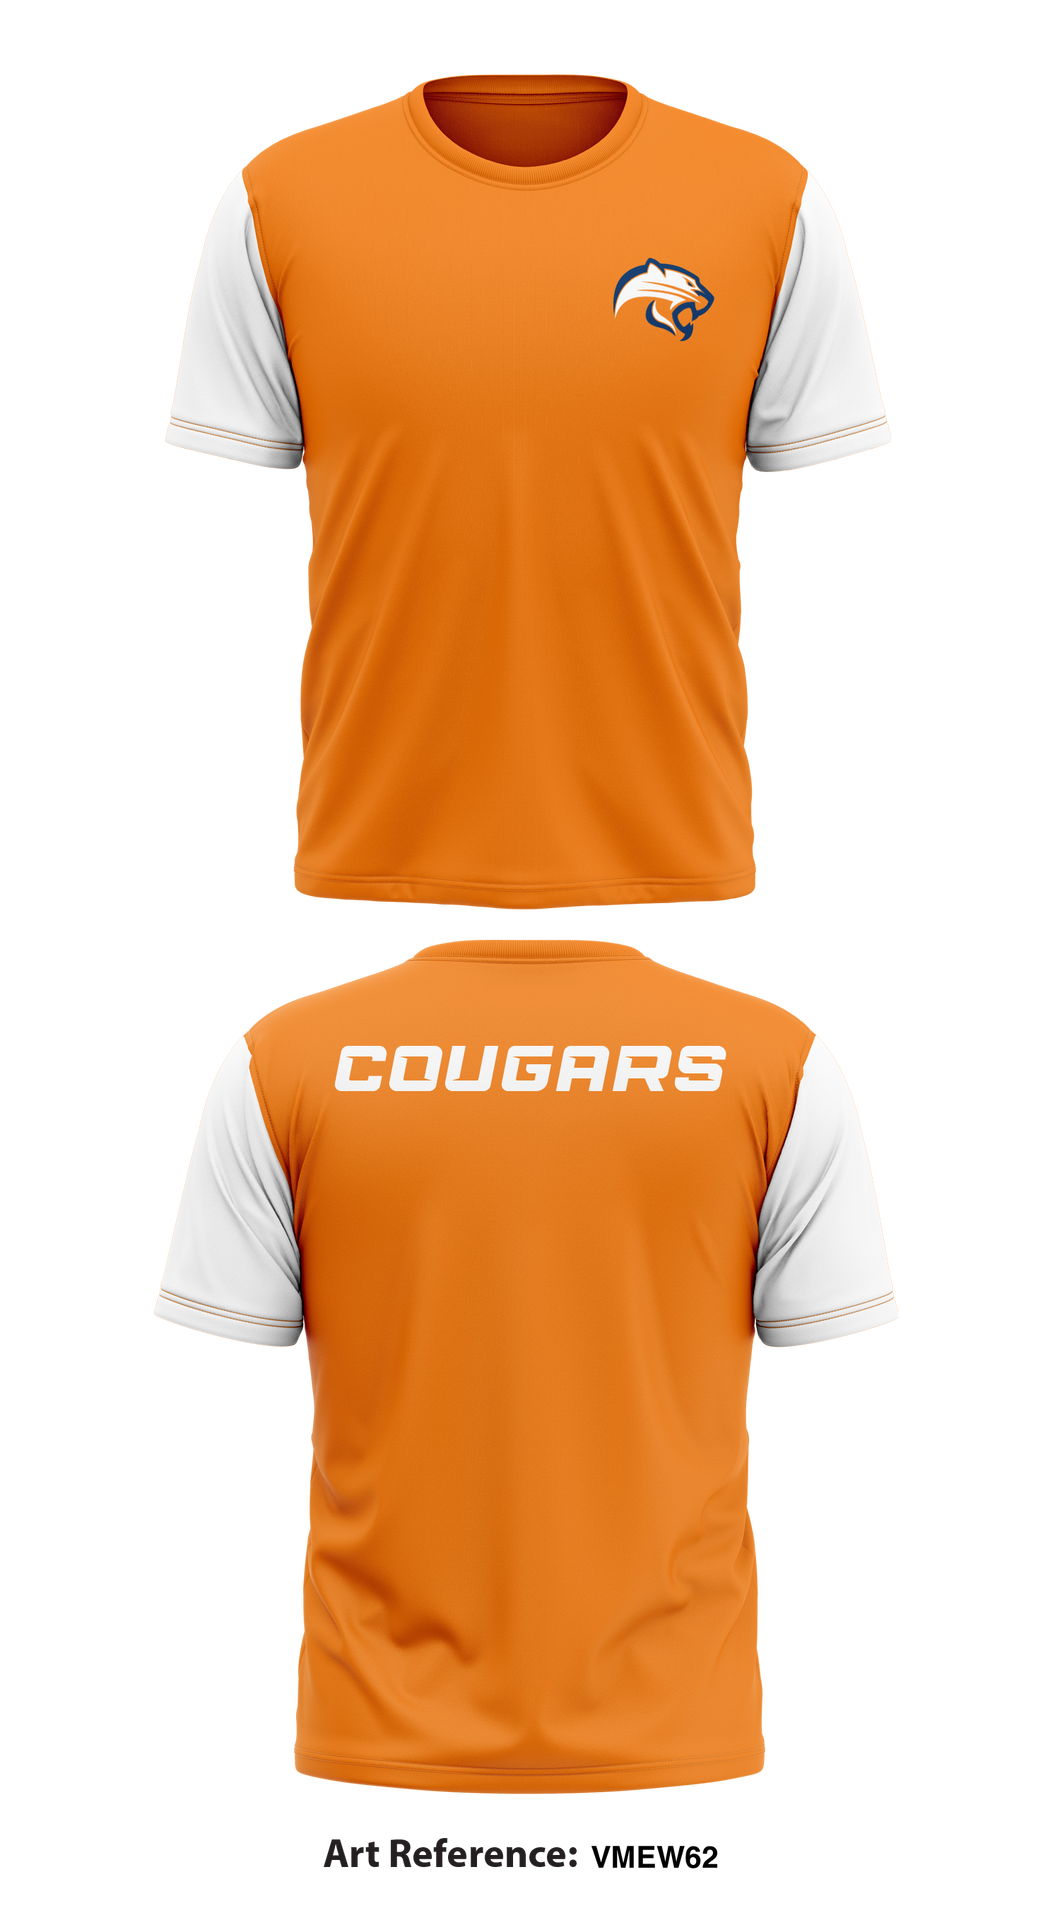 Cougars 75827226 Short Sleeve Performance Shirt - 1